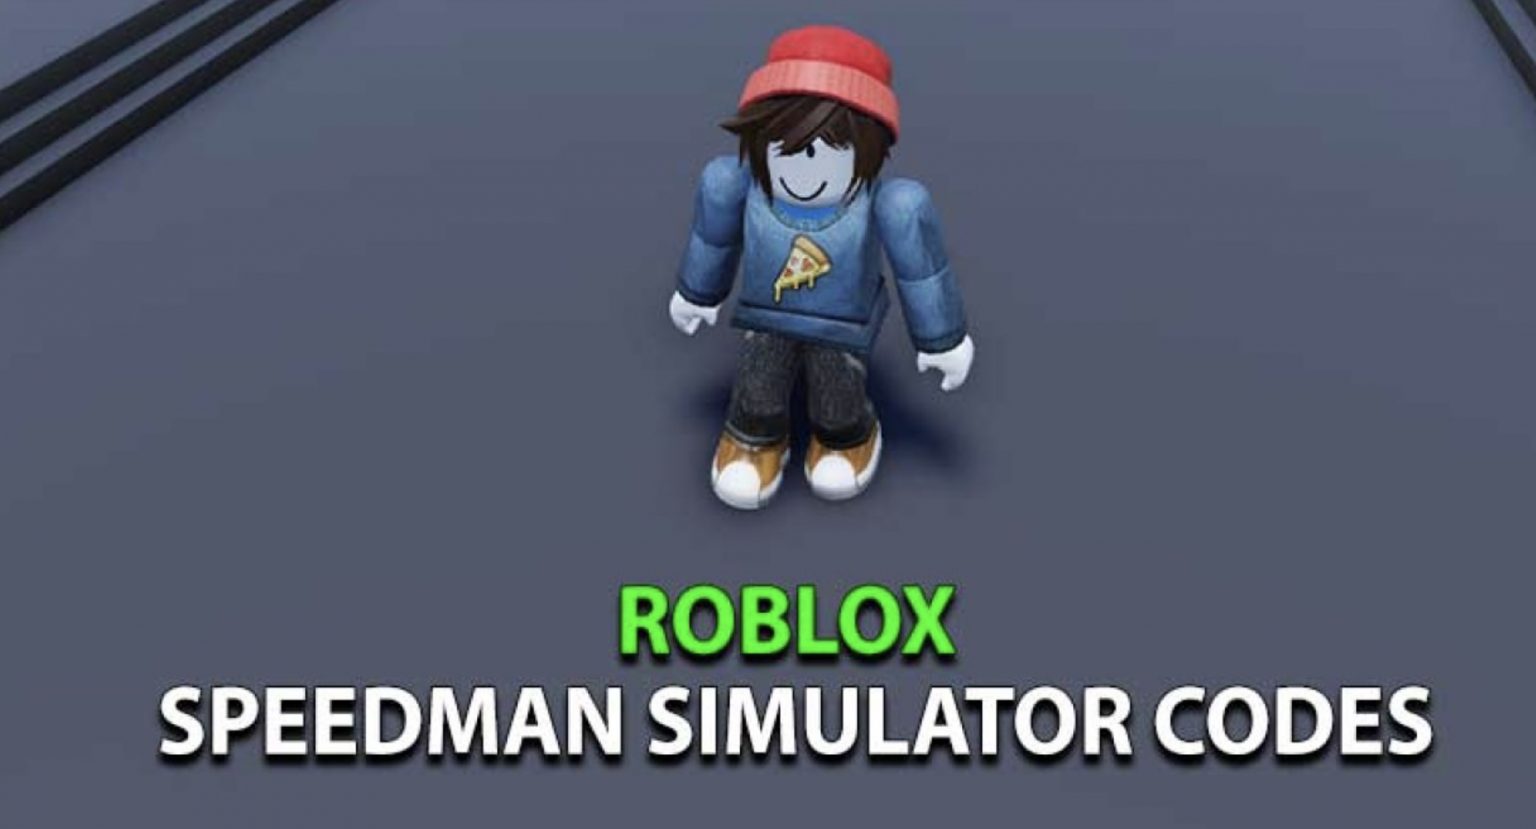 roblox-speedman-simulator-codes-november-2021-how-to-redeem-gameplayerr